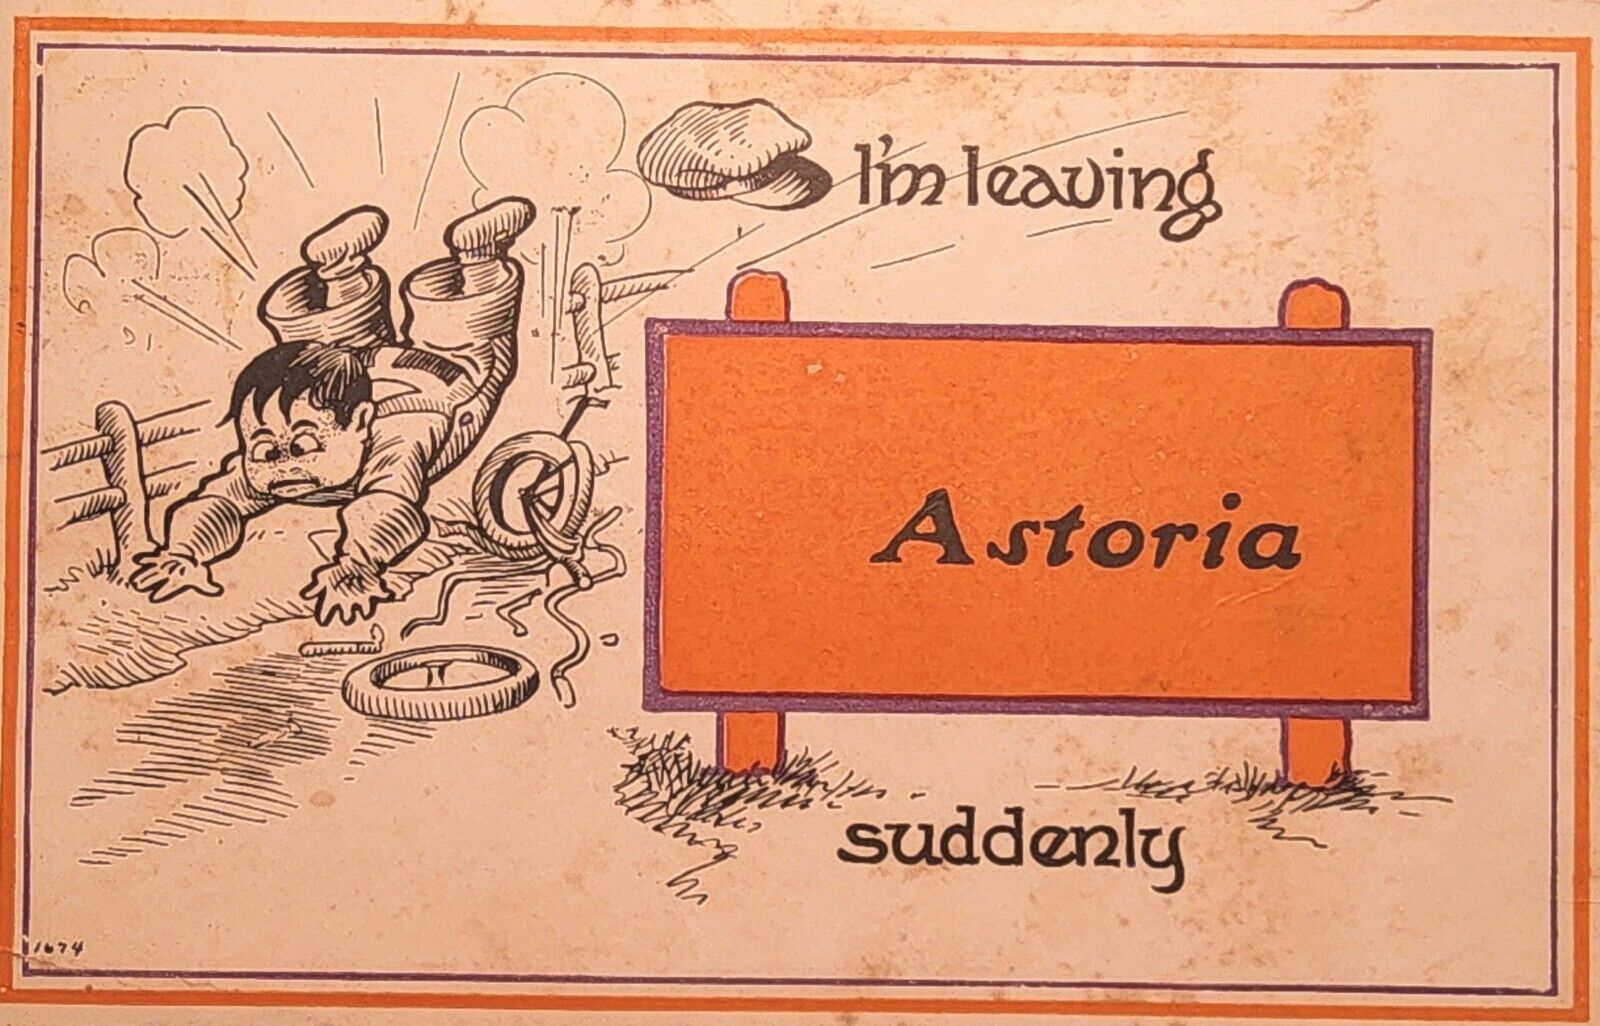 1915 Greetings Postcard ~ I'm Leaving Astoria, Illinois Suddenly. #-4113